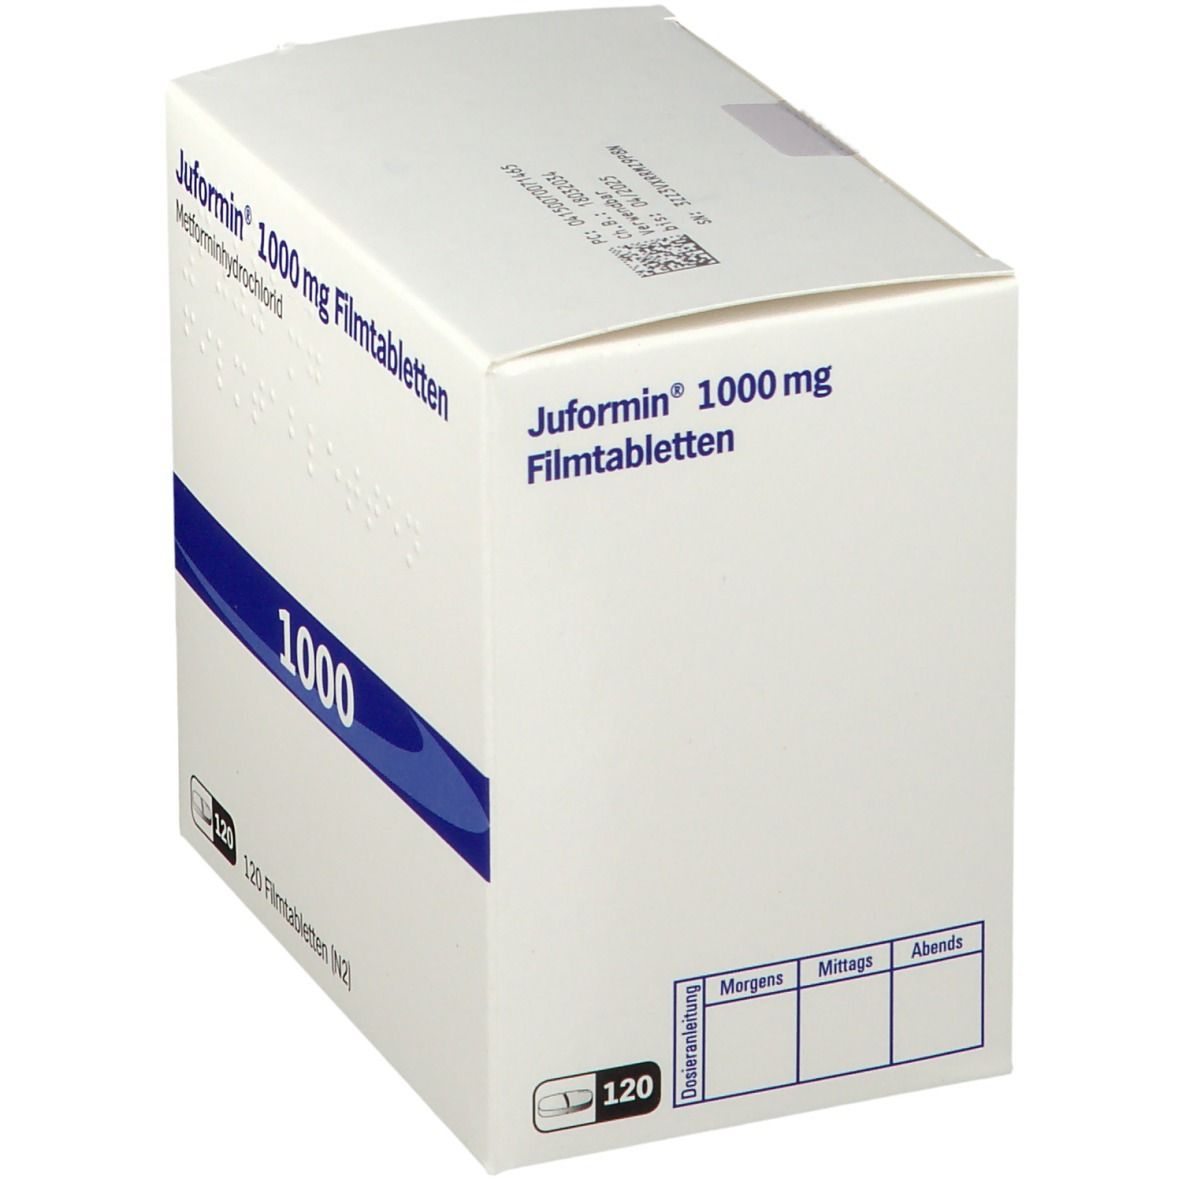 Juformin® 1000 mg